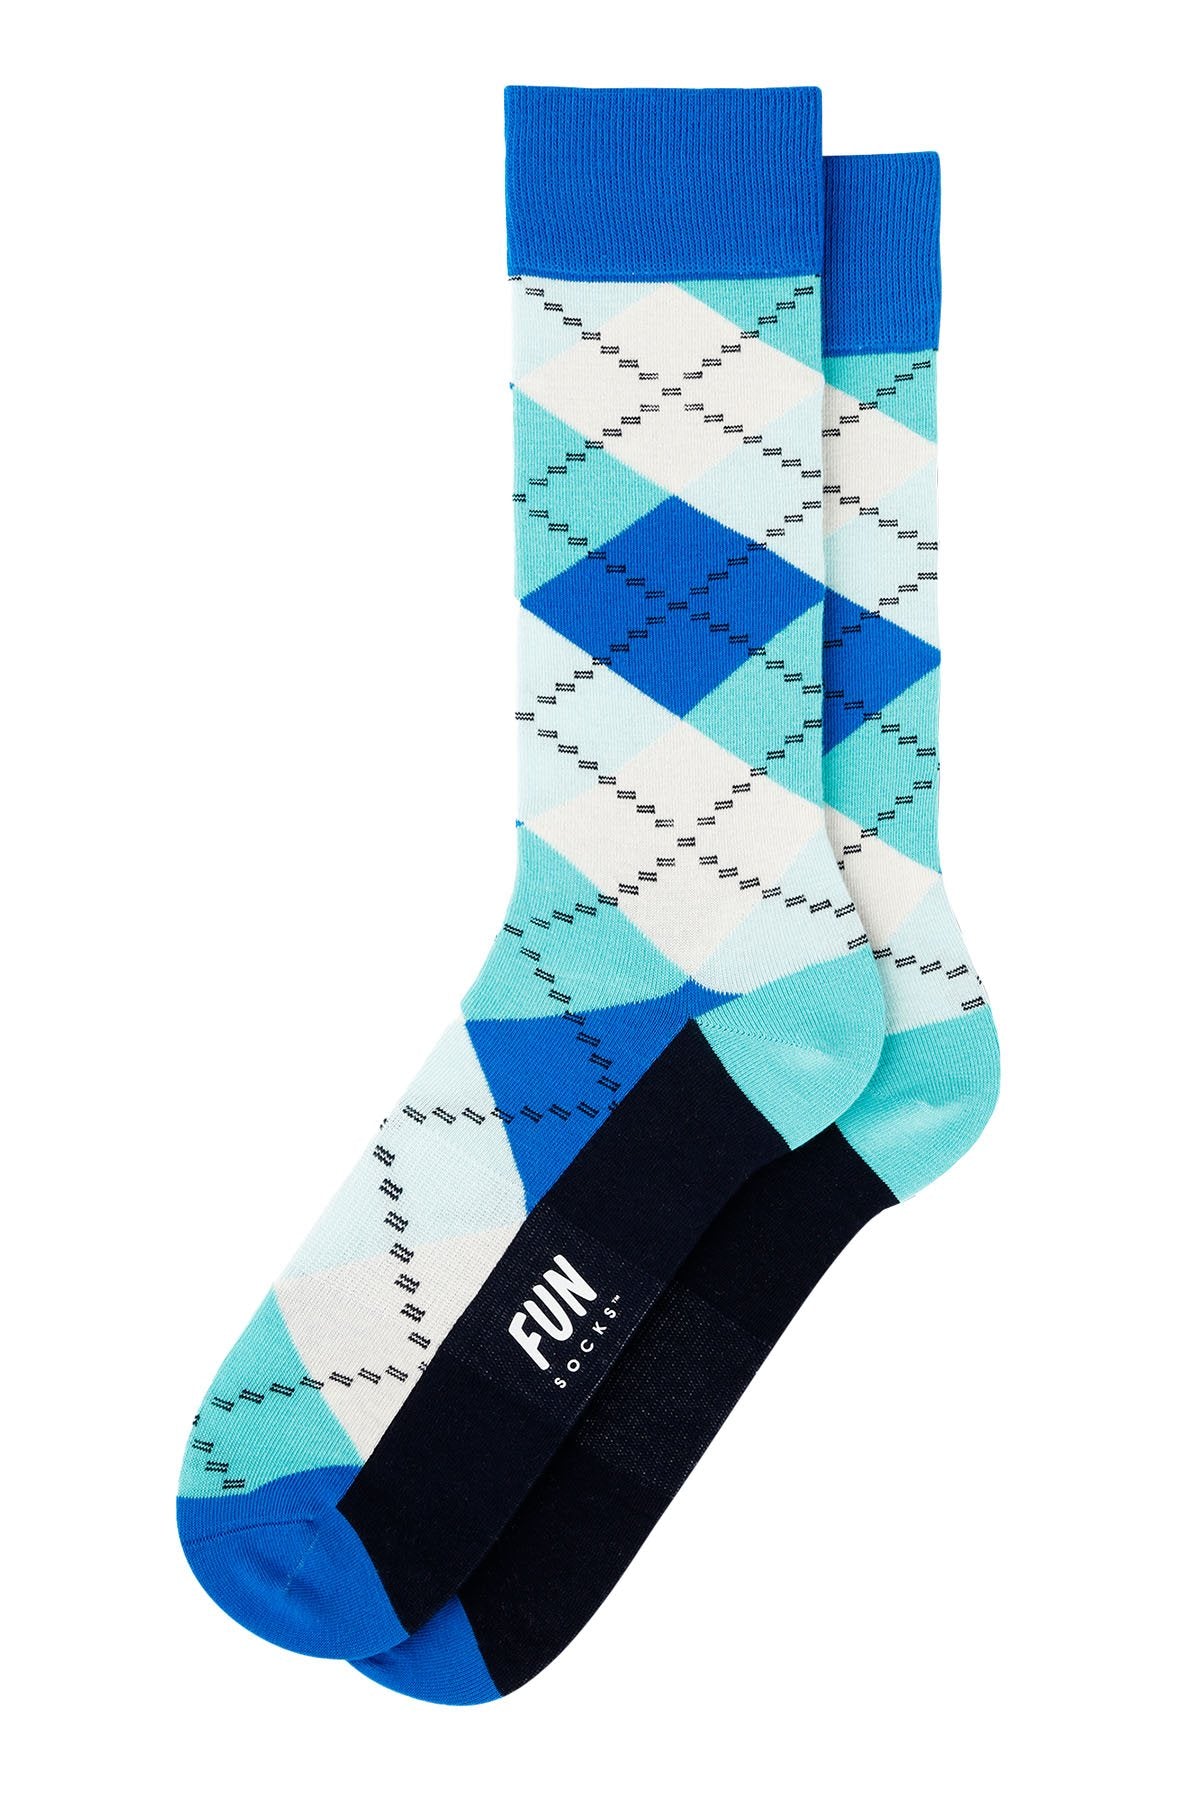 Fun Socks Blue/White/Turquoise Argyle Crew Socks